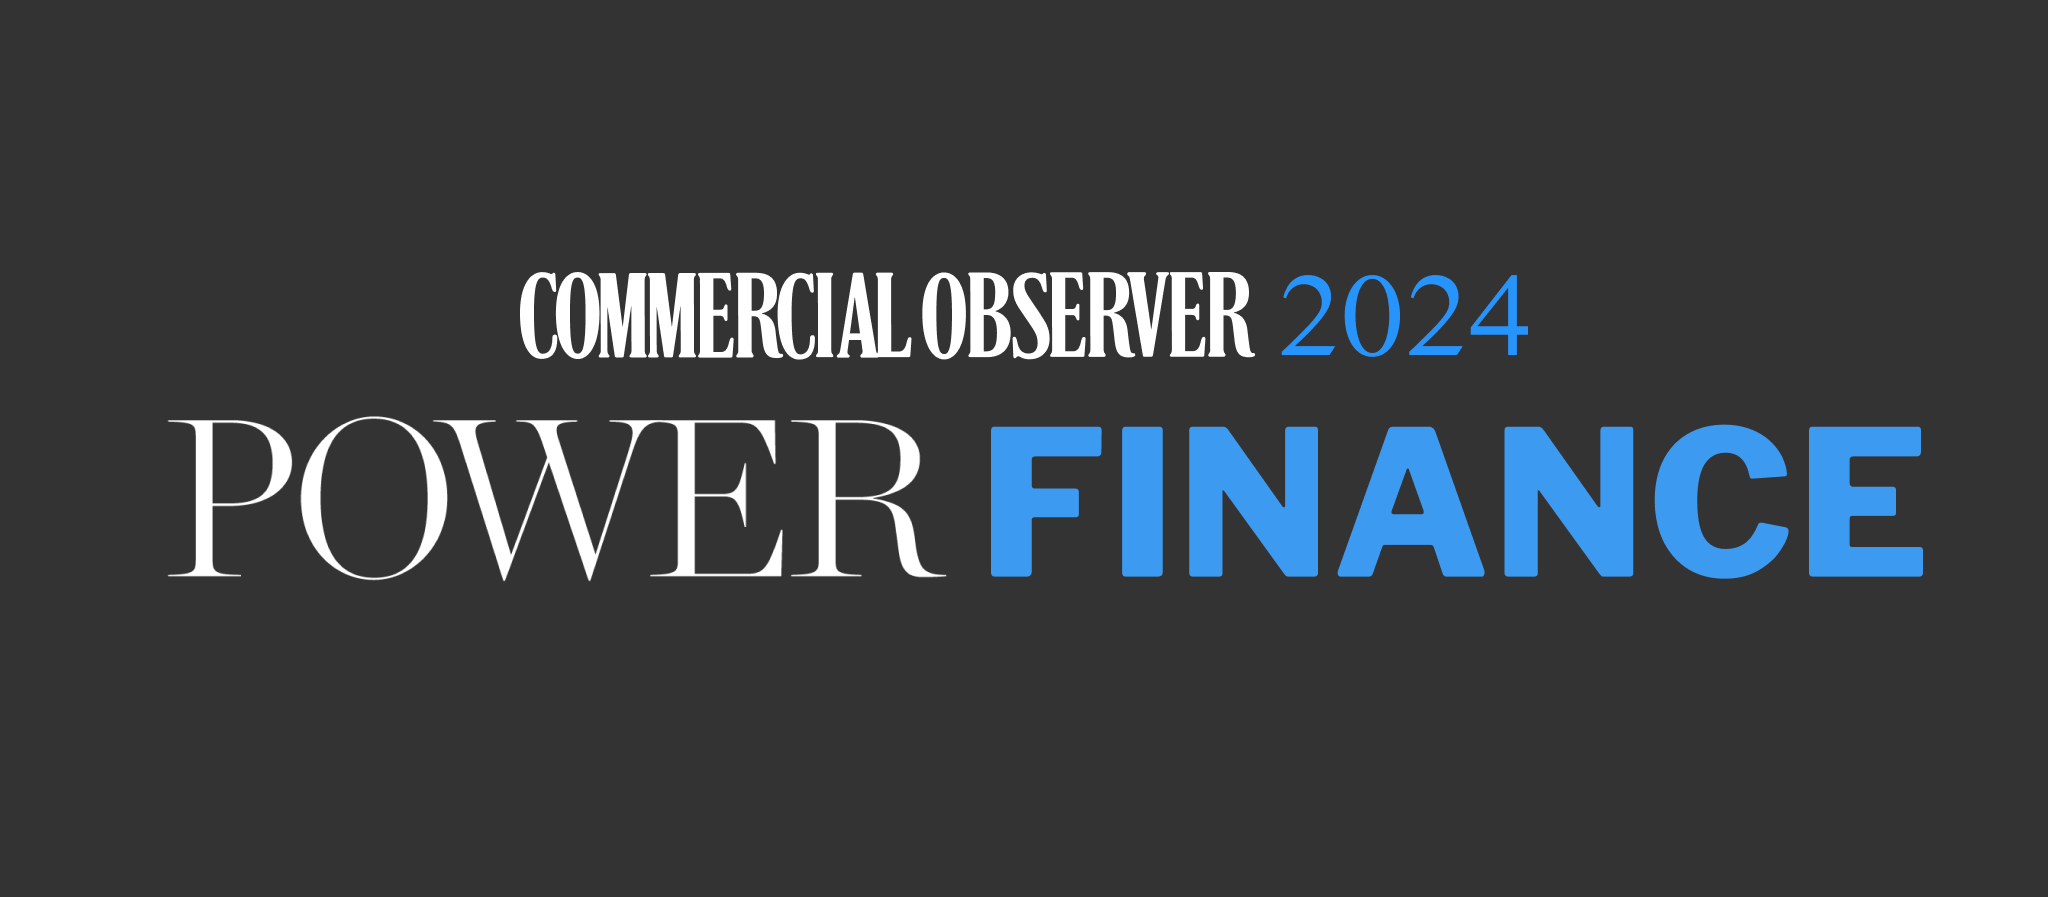 Power Finance 2024 logo